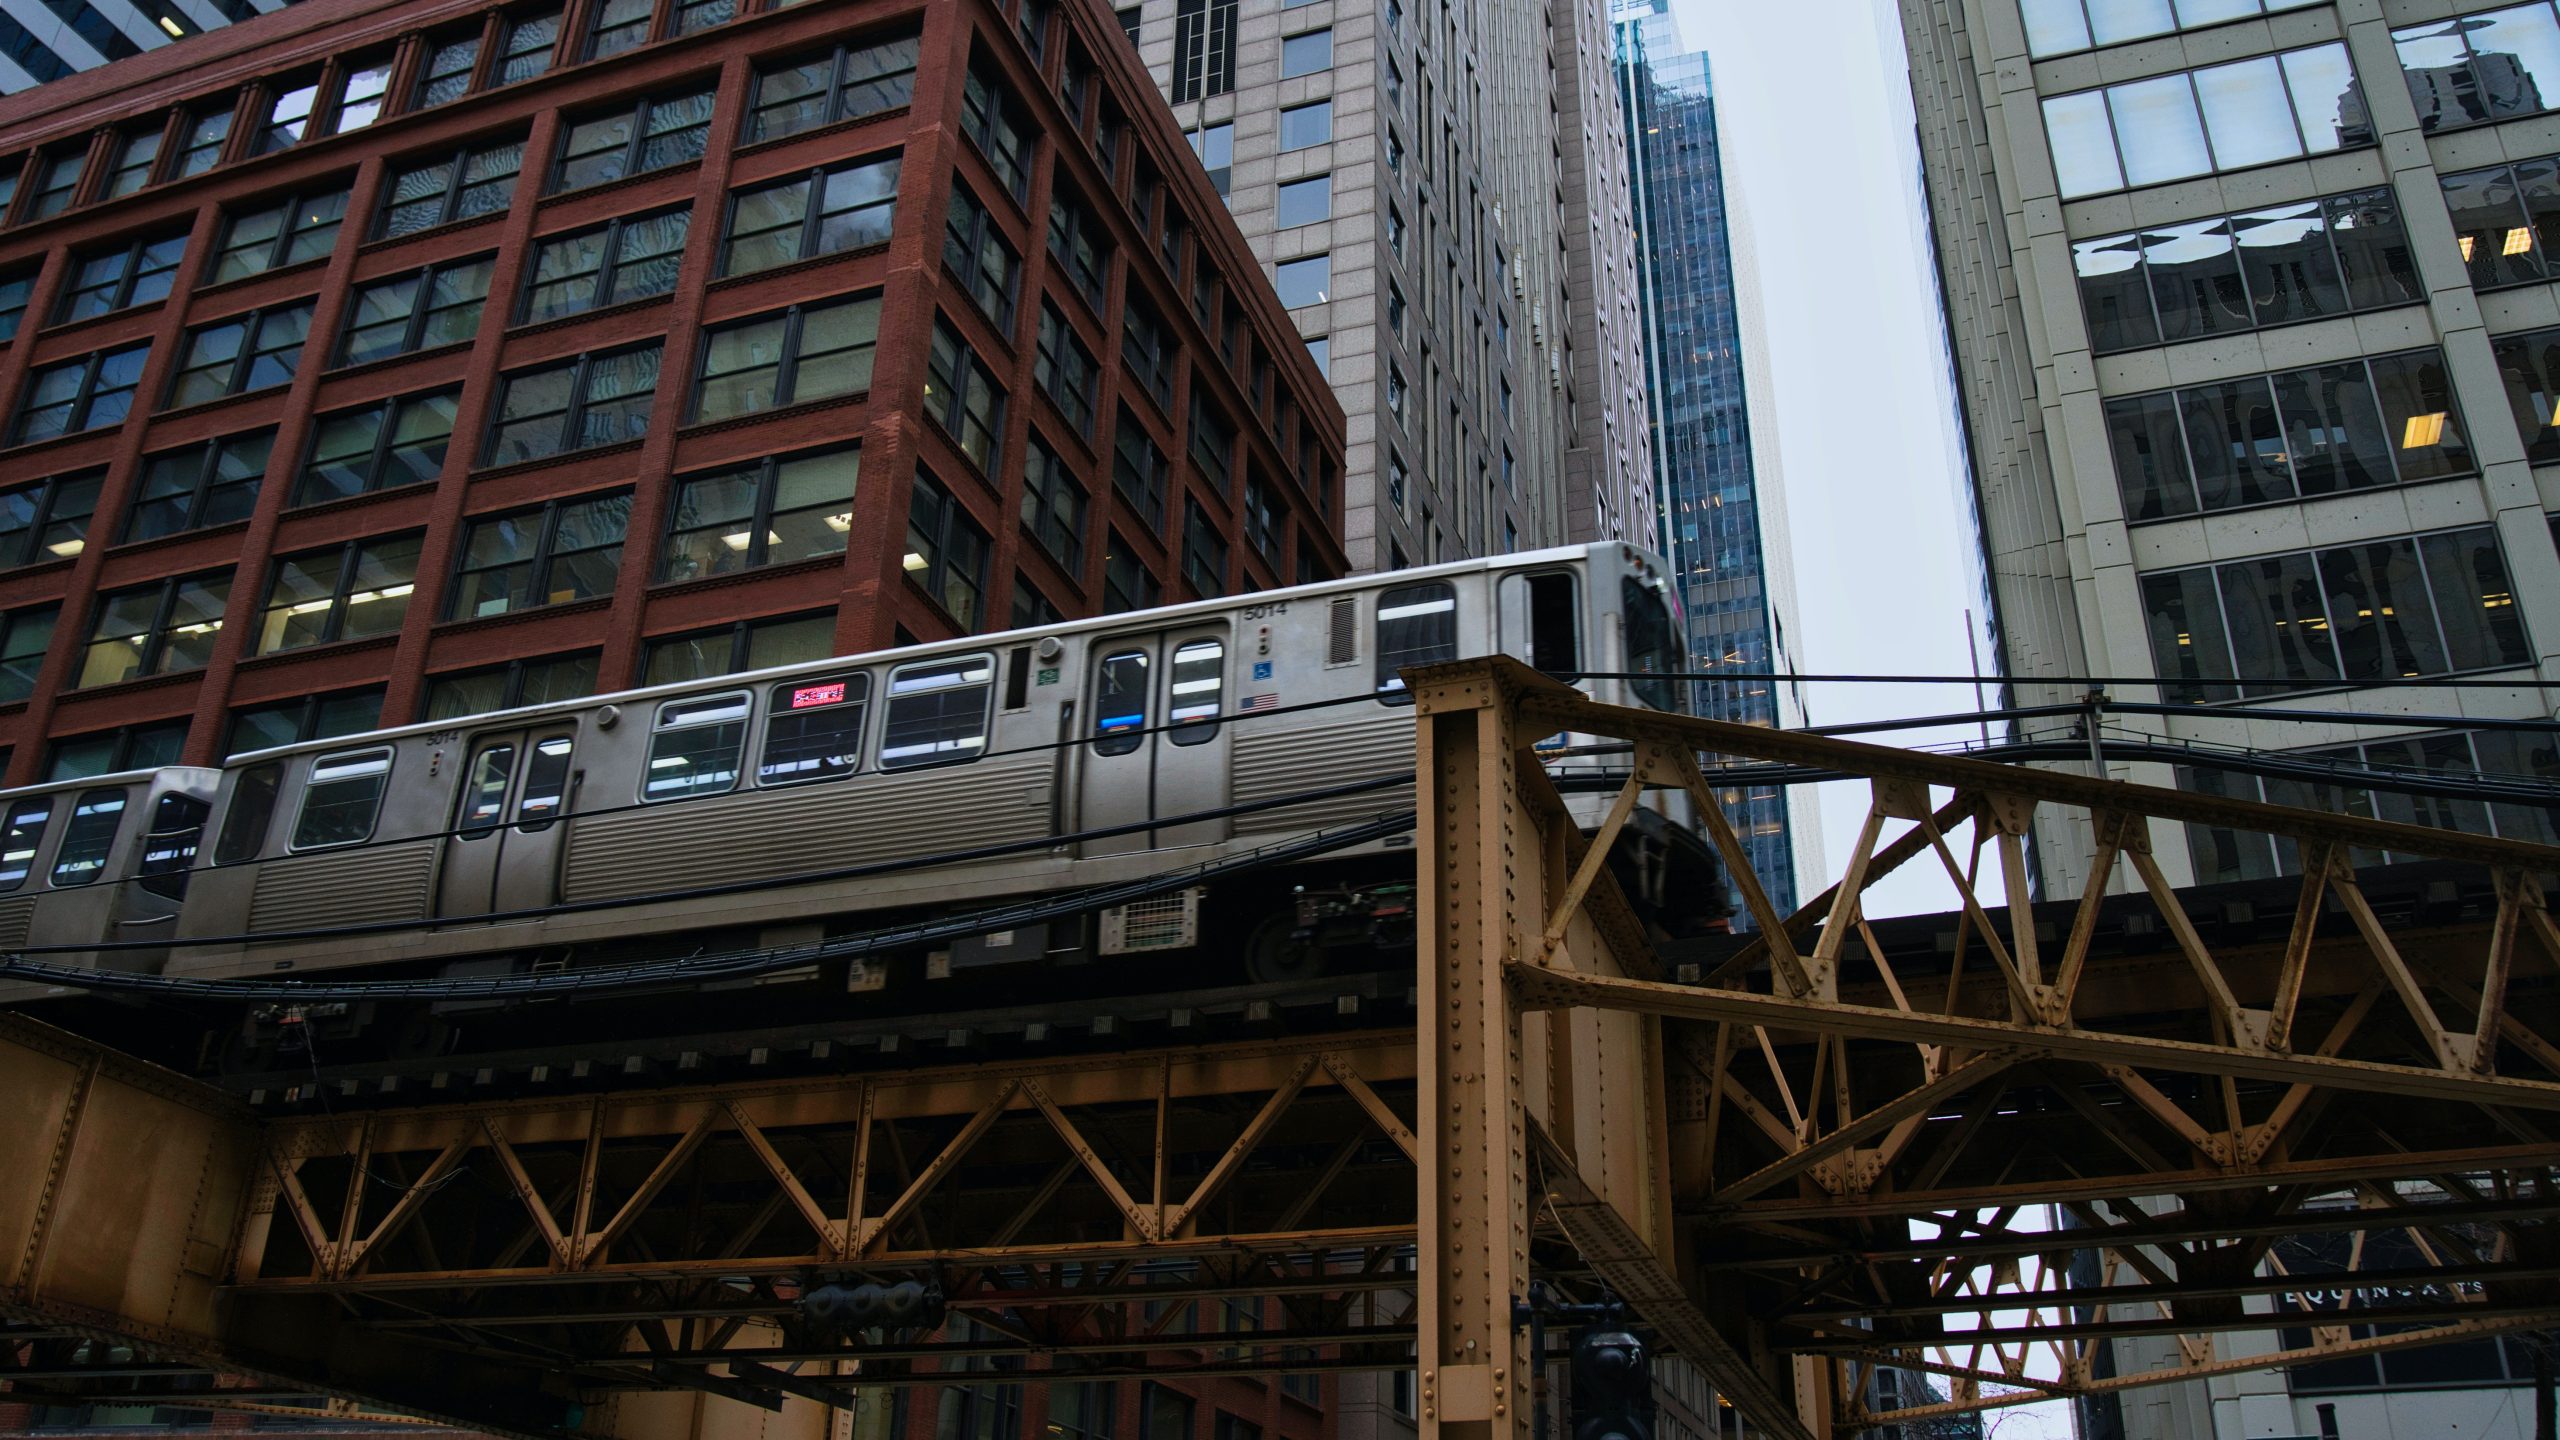 Metro Train in City in USA